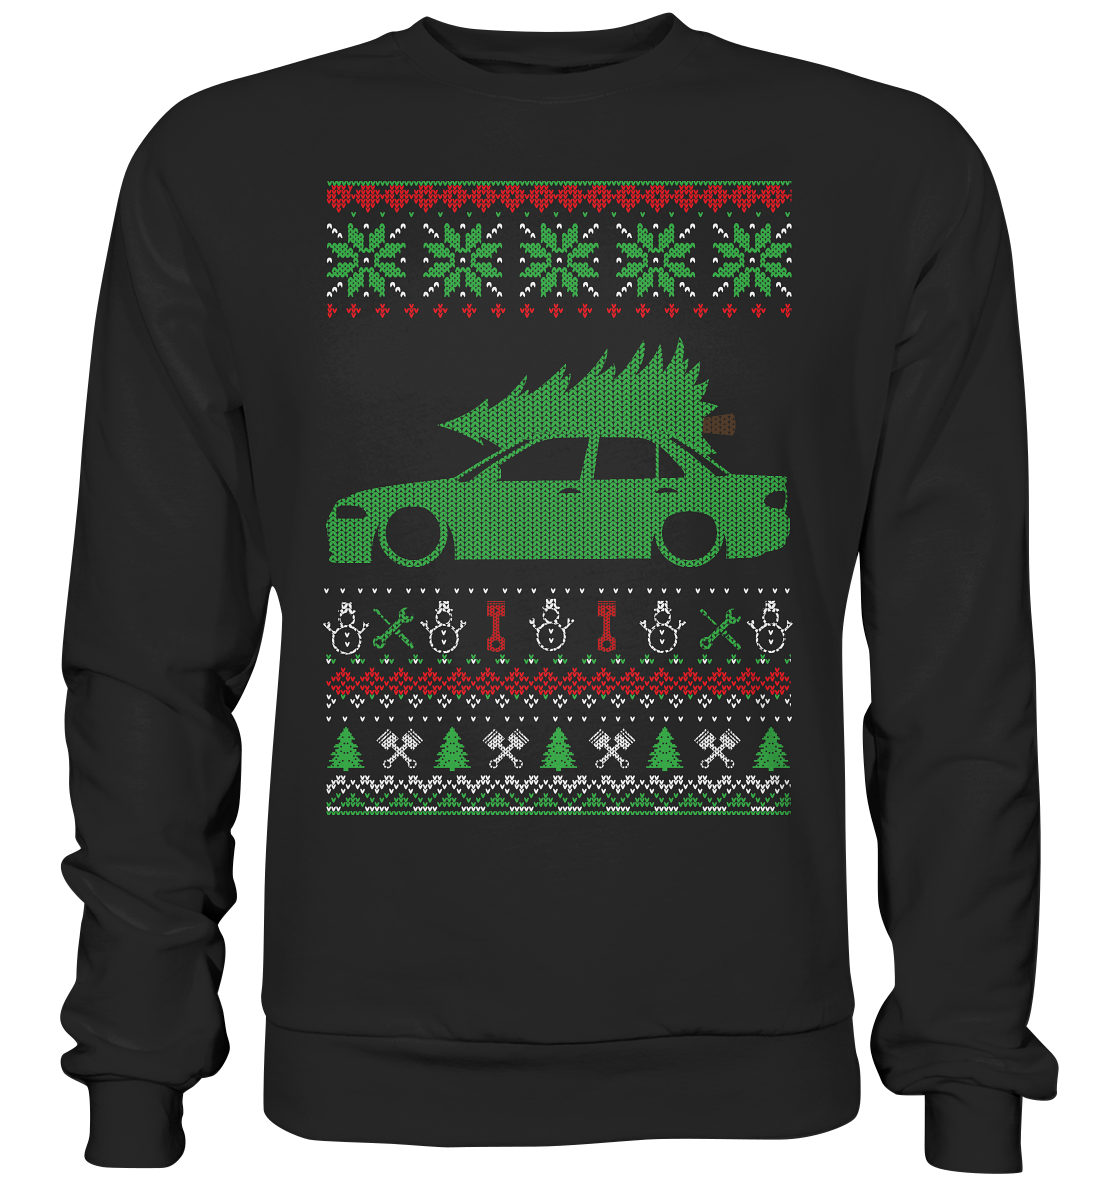 CODUGLY_MGKLE123 - Premium Sweatshirt